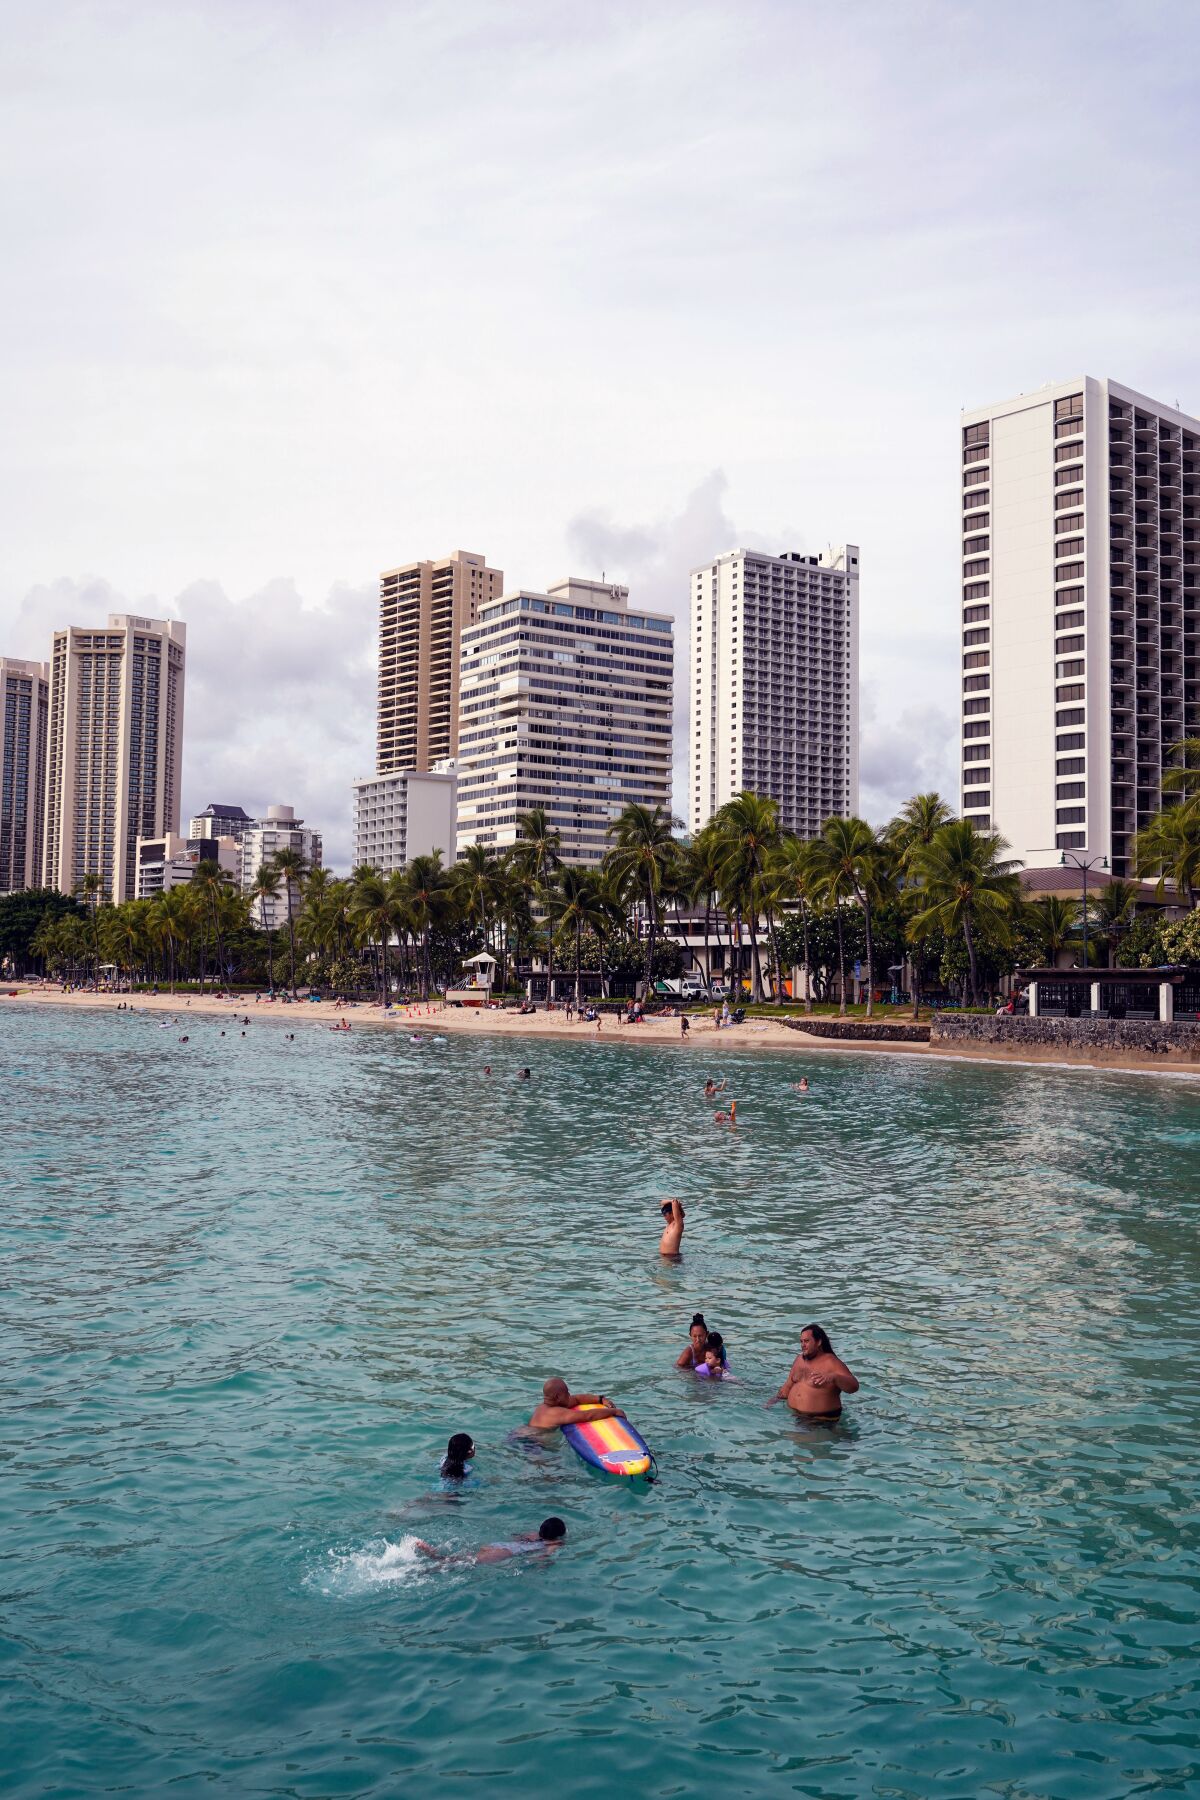 People wade in the waters off Waikiki Beach.